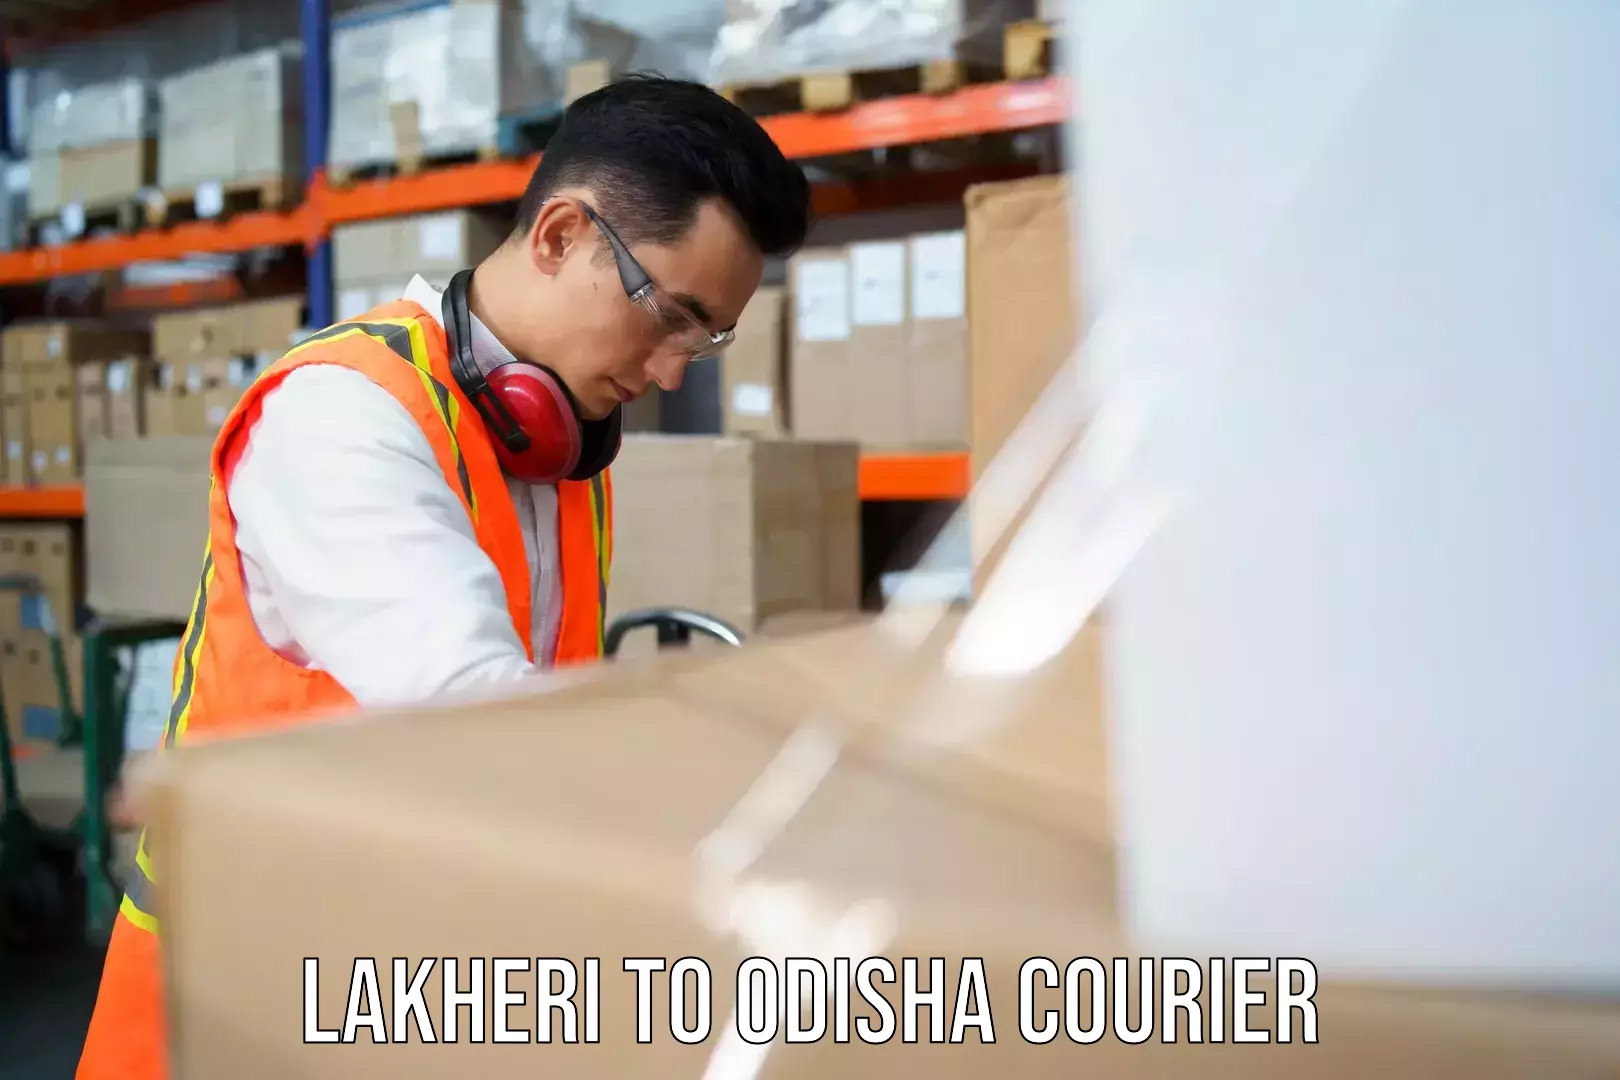 Courier service comparison Lakheri to Angul